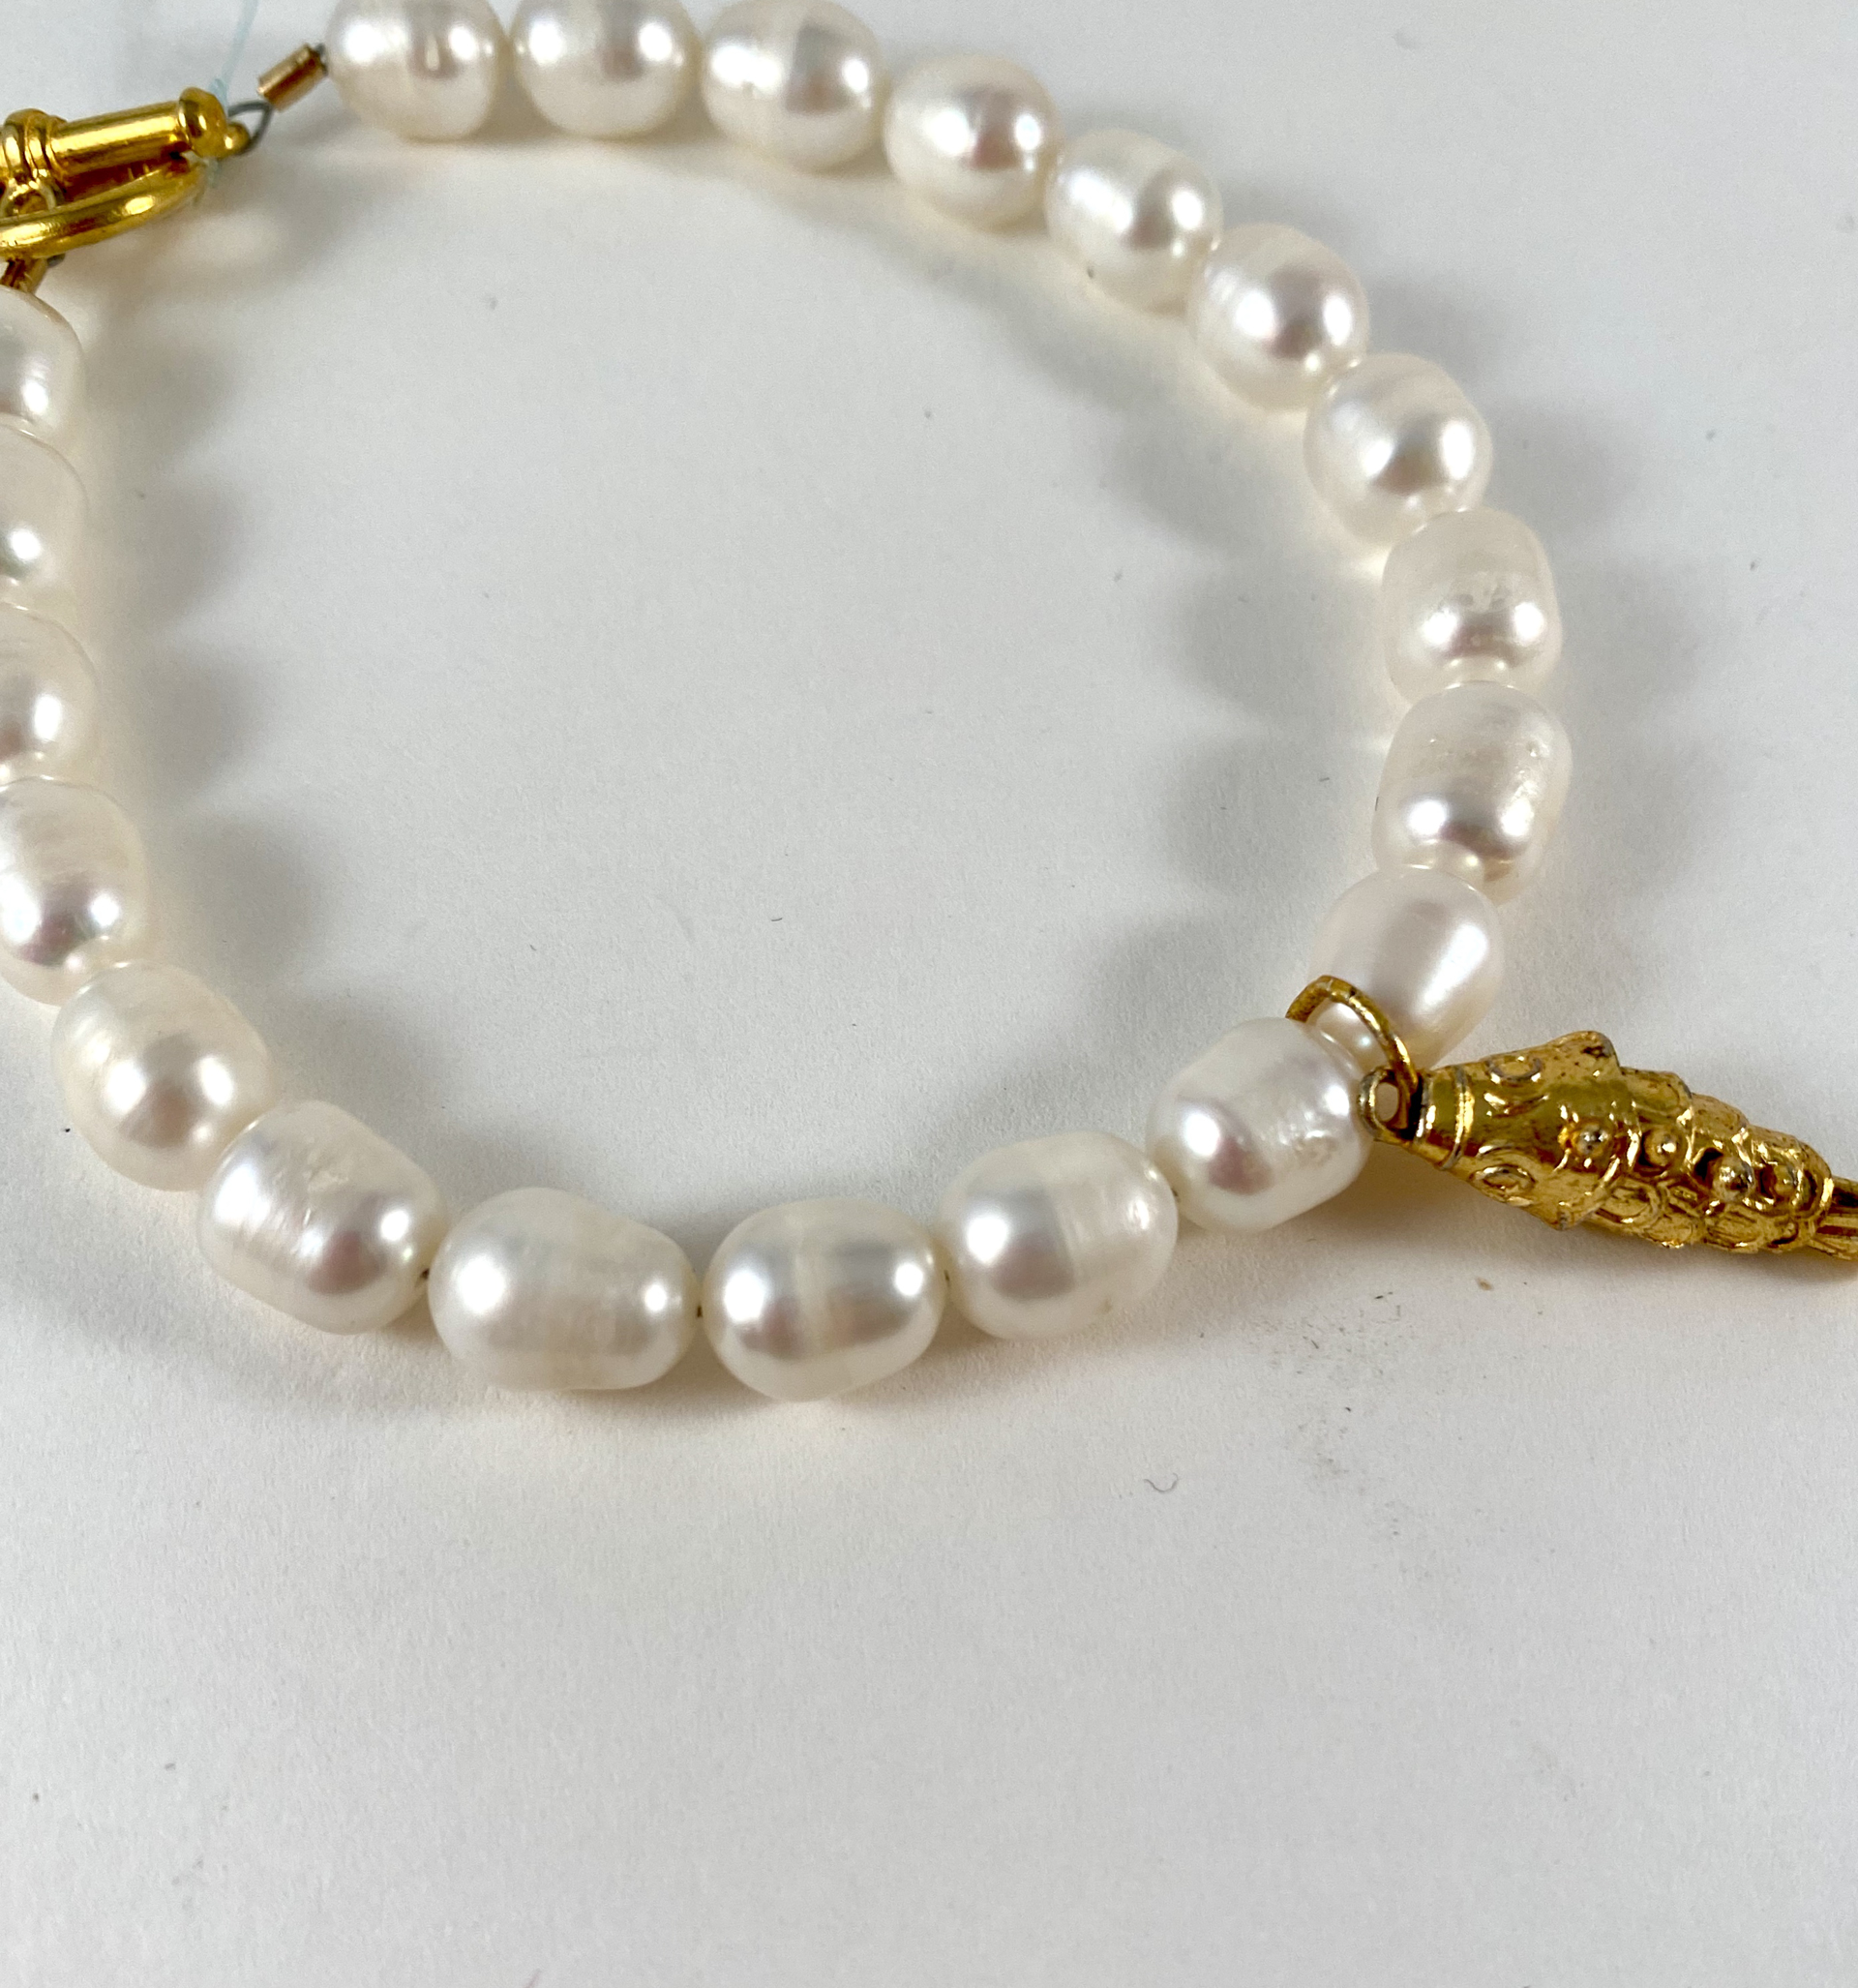 White Pearl Bracele, brass fish charm and clasp P17 by Nance Trueworthy